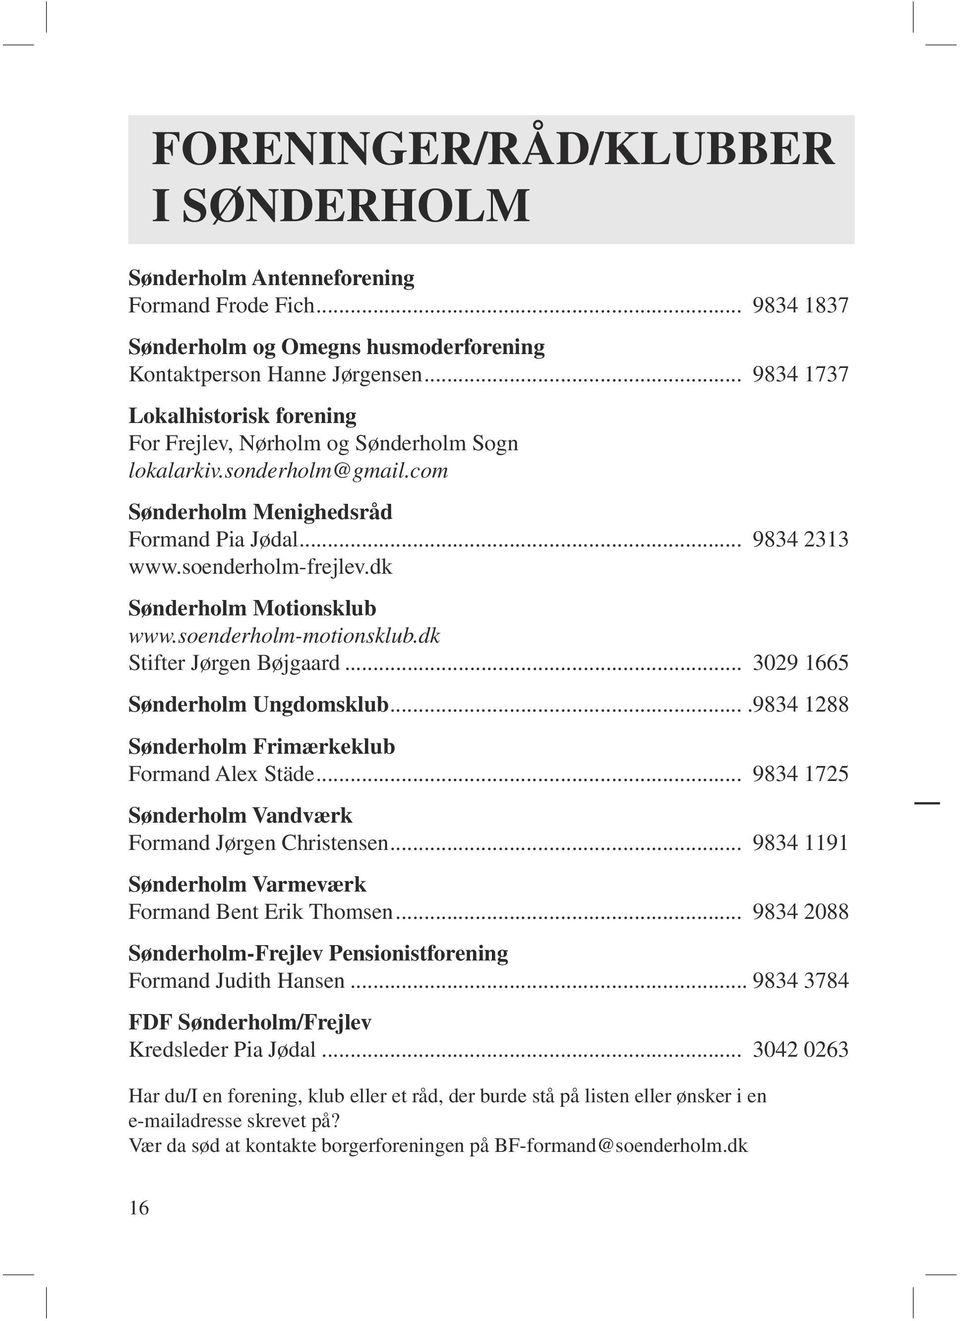 dk Sønderholm Motionsklub www.soenderholm-motionsklub.dk Stifter Jørgen Bøjgaard... 3029 1665 Sønderholm Ungdomsklub....9834 1288 Sønderholm Frimærkeklub Formand Alex Städe.